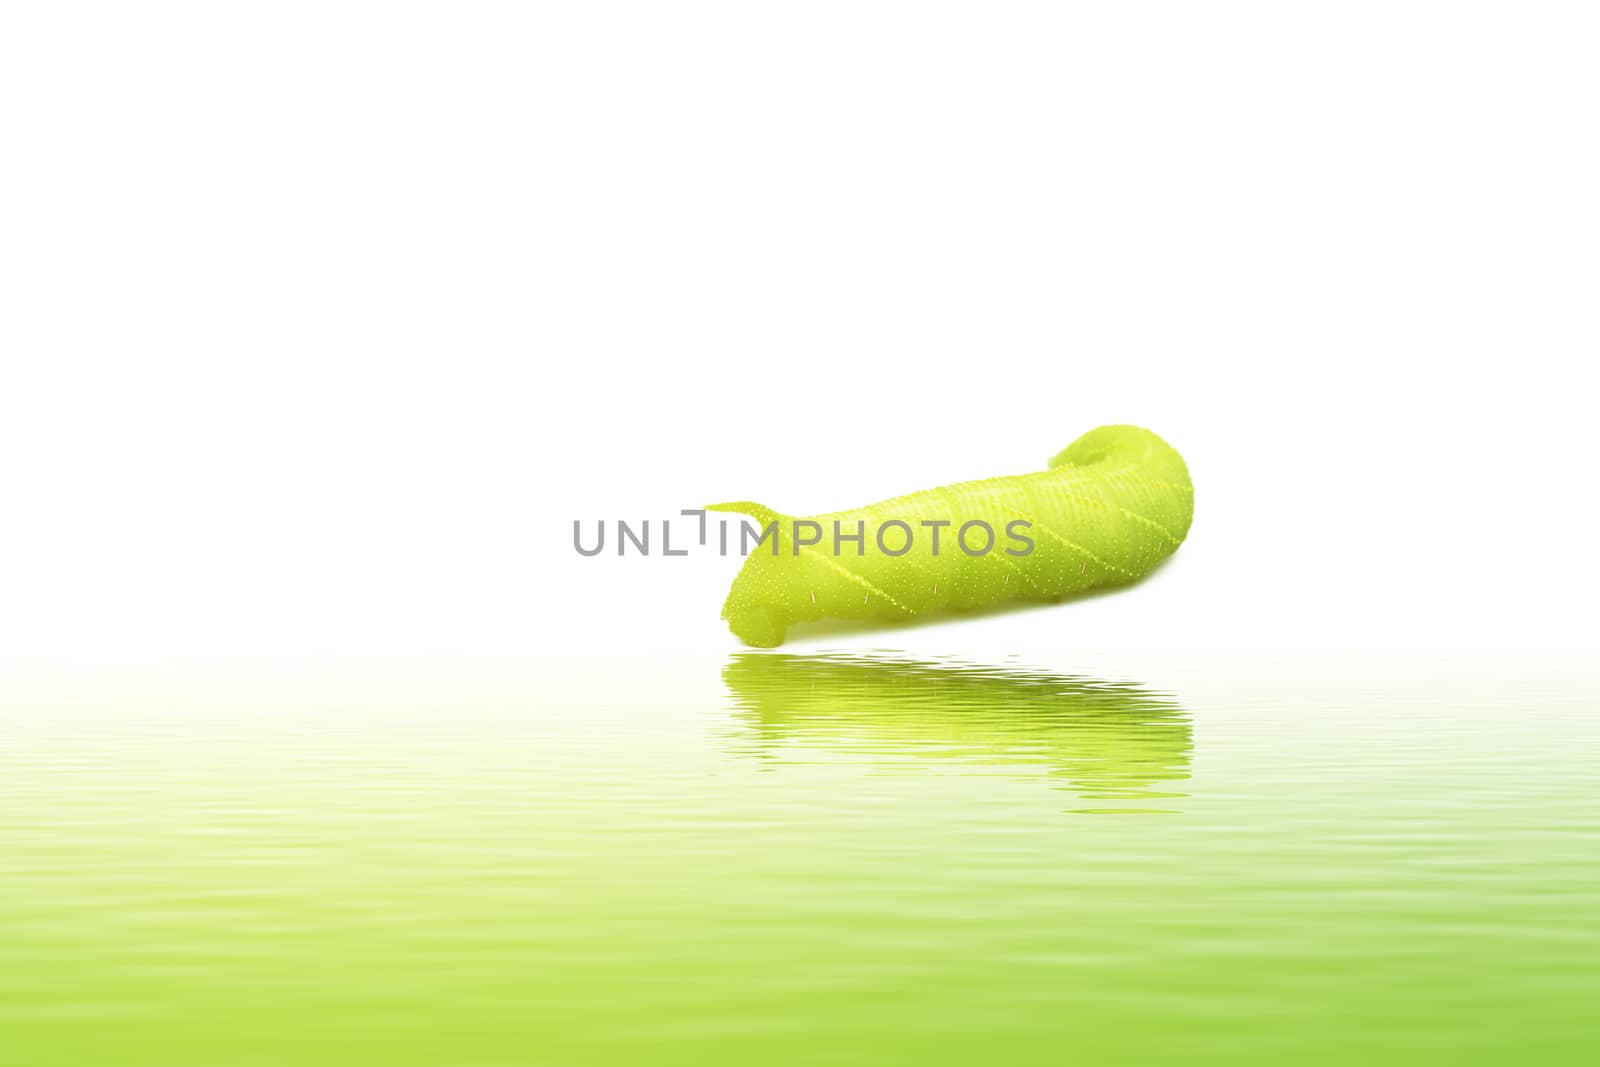 A close up of the green caterpillar